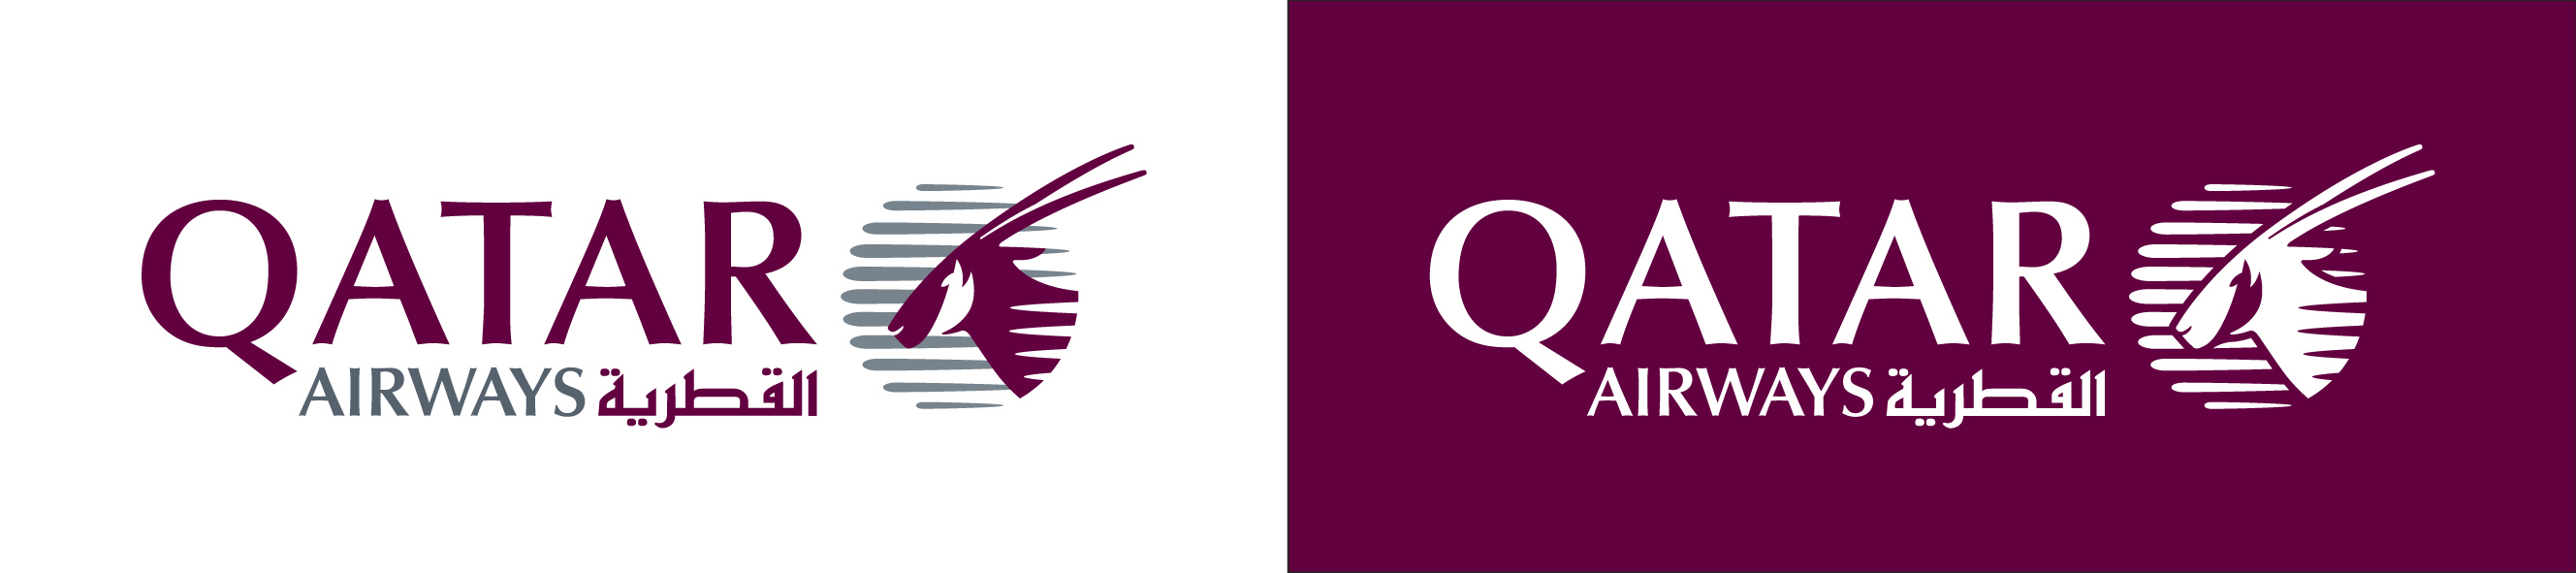 Qatar Airlines Logo Vector - HD Wallpaper 